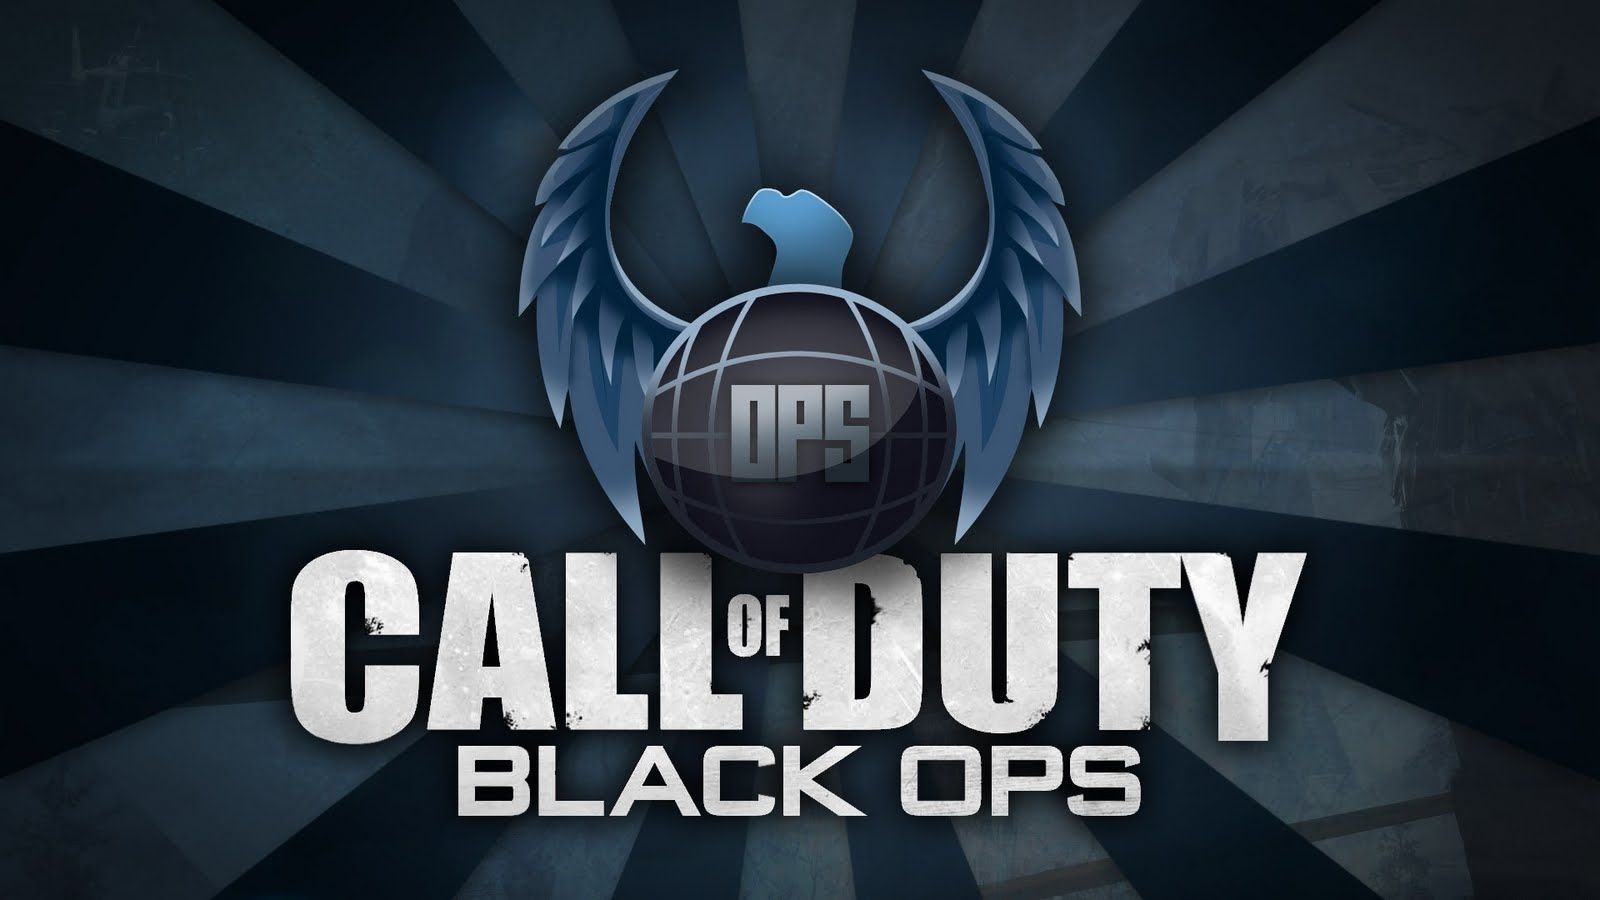 Call of Duty Black Ops HD Logo Wallpaper Download HD Video Game Wallpaper